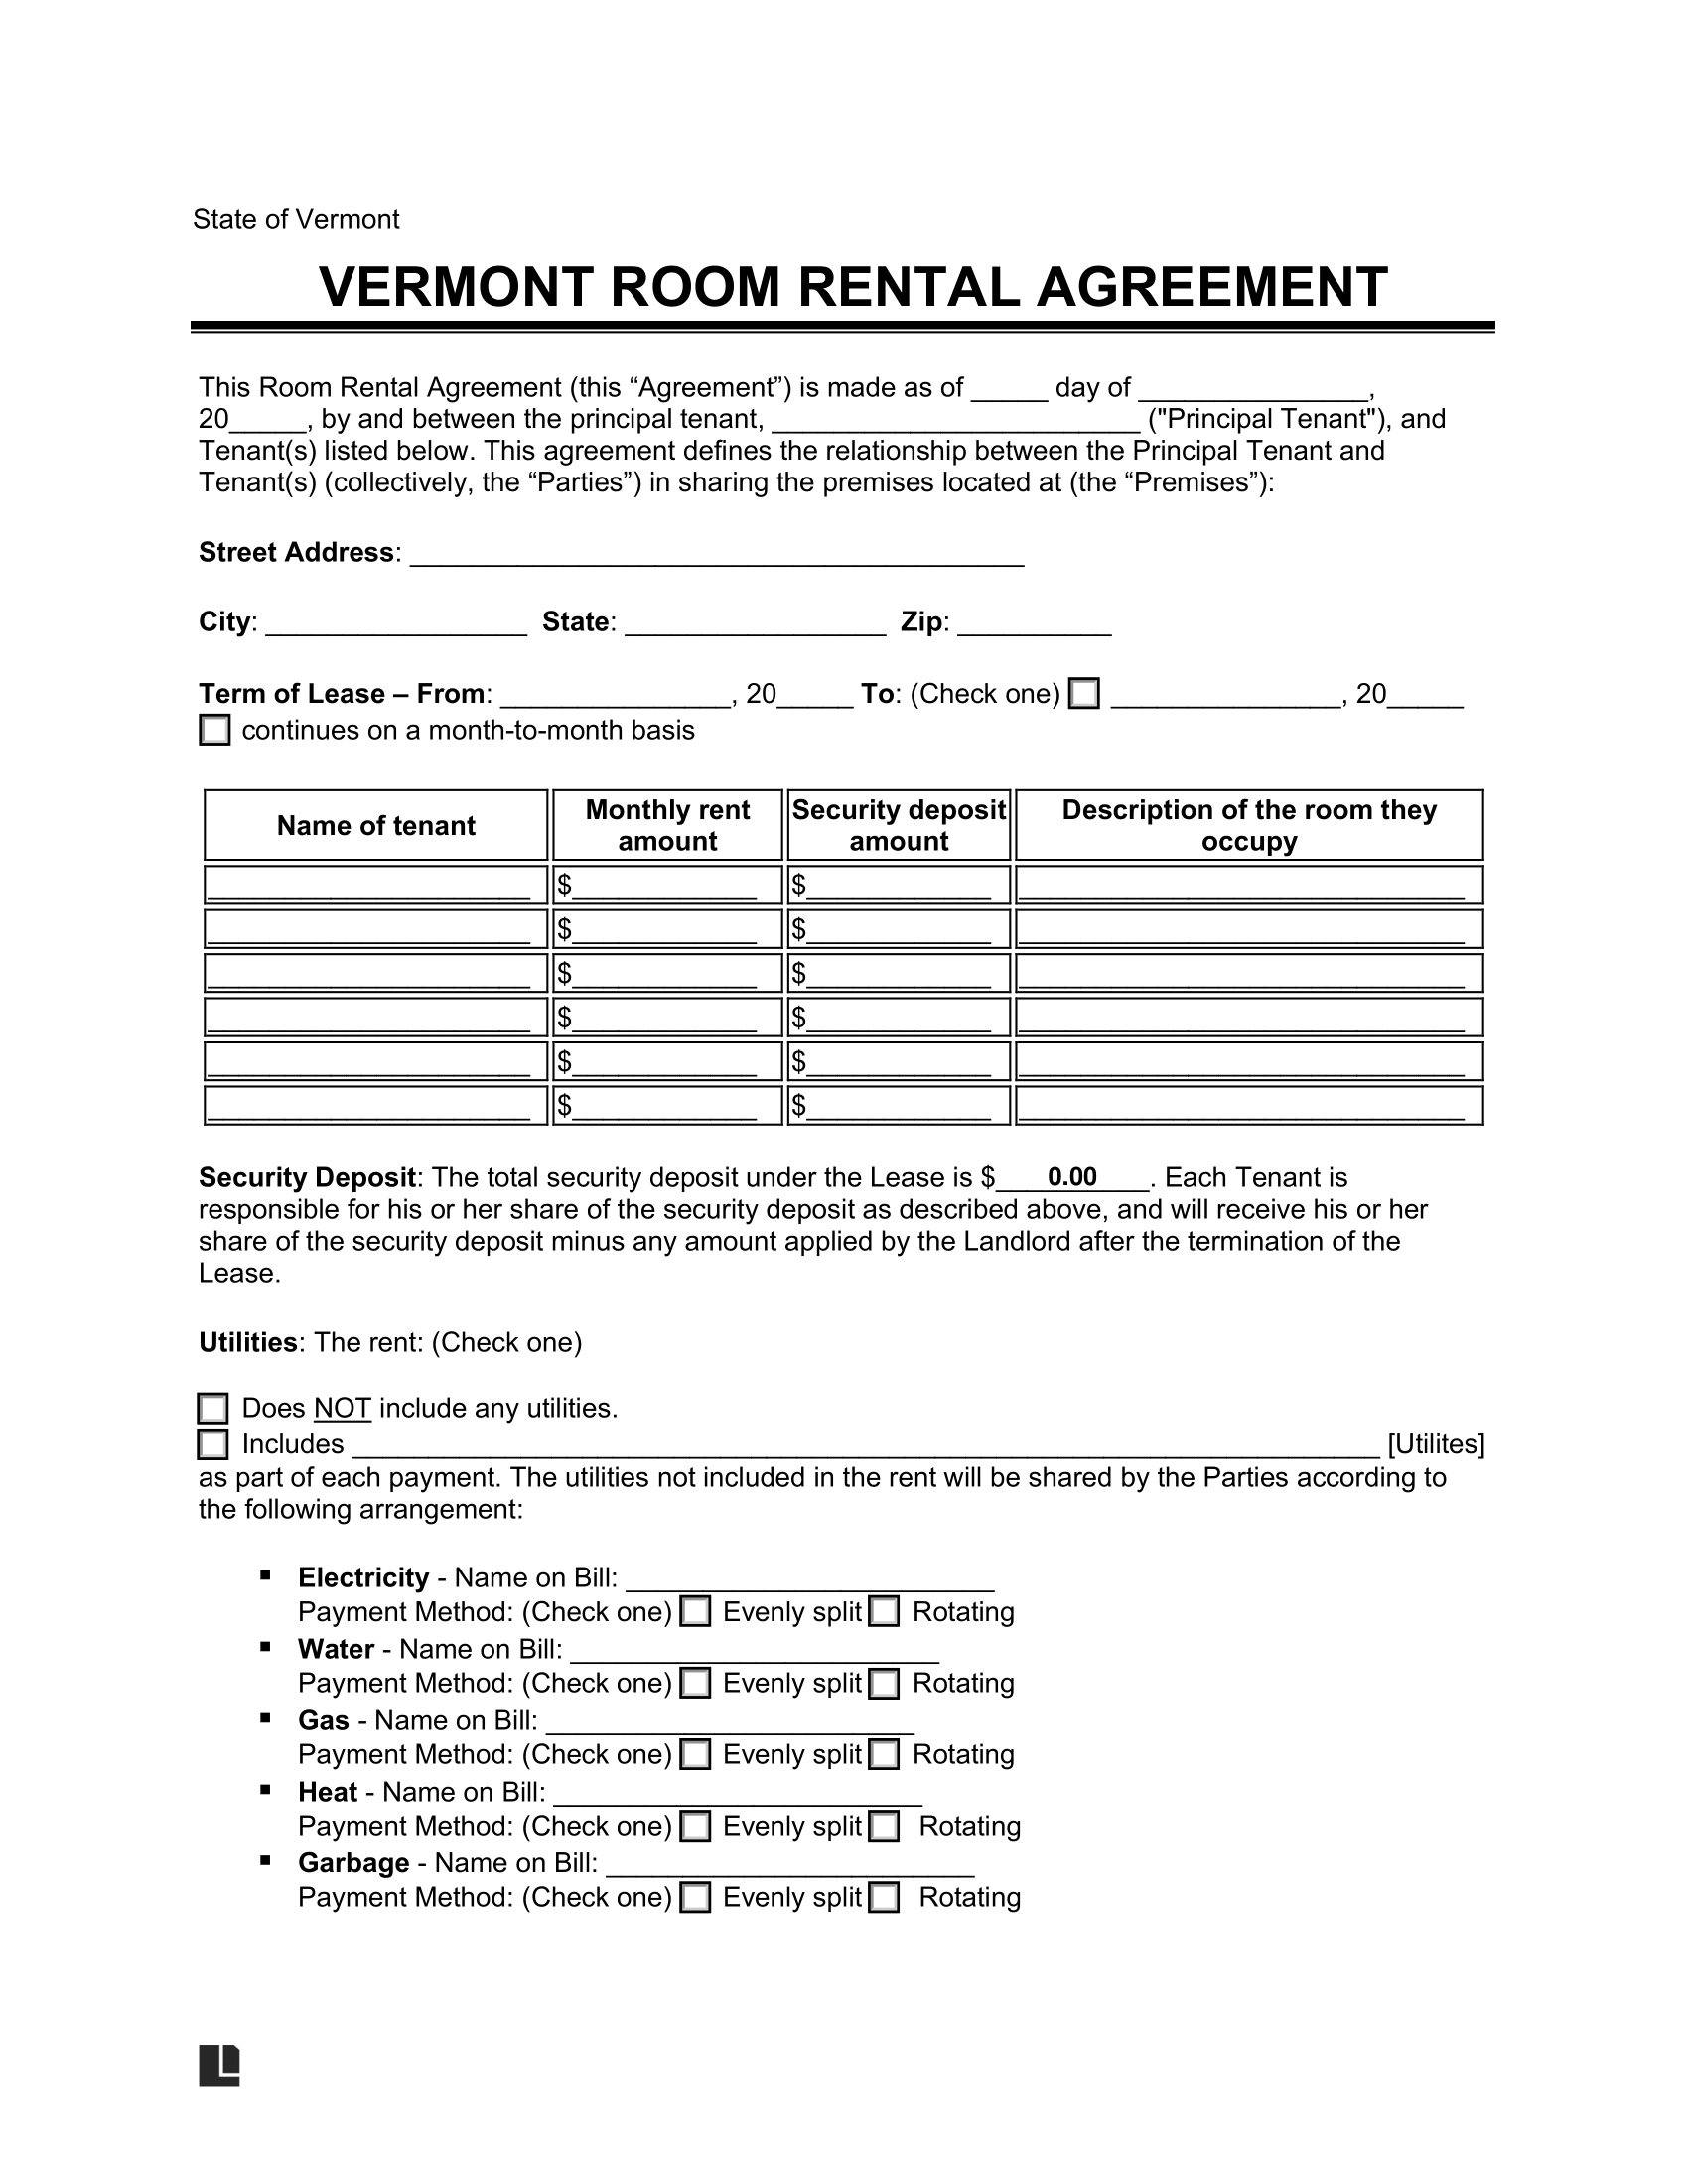 Vermont Room Rental Agreement